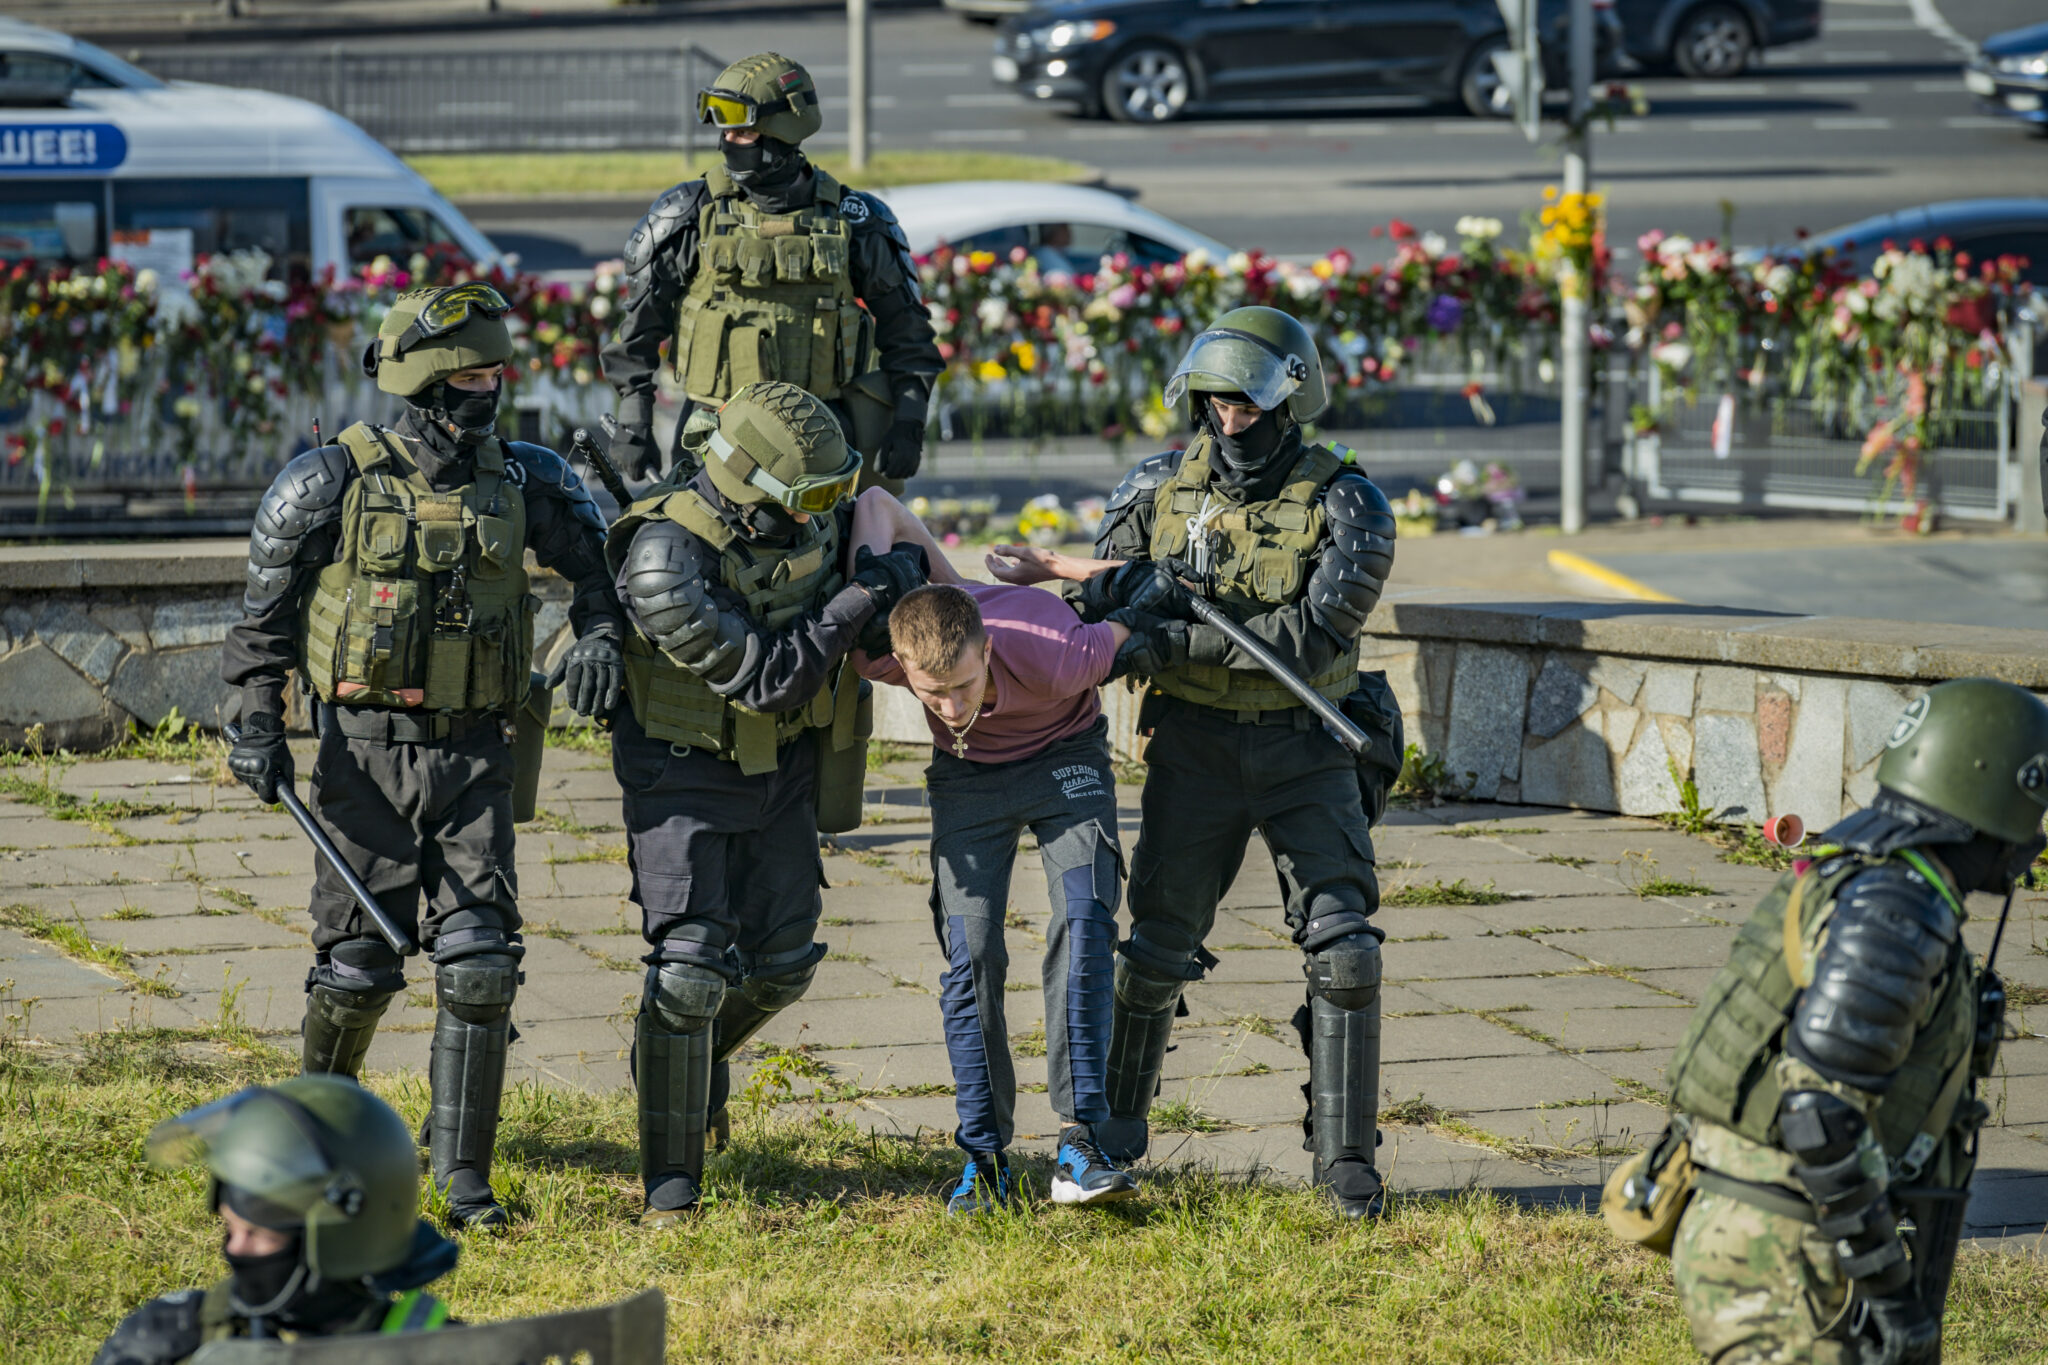 Задержание протестующего 11 августа 2020 г. в Минске. Фото Celestino Arce Lavin / TASS / Scanpix / Leta